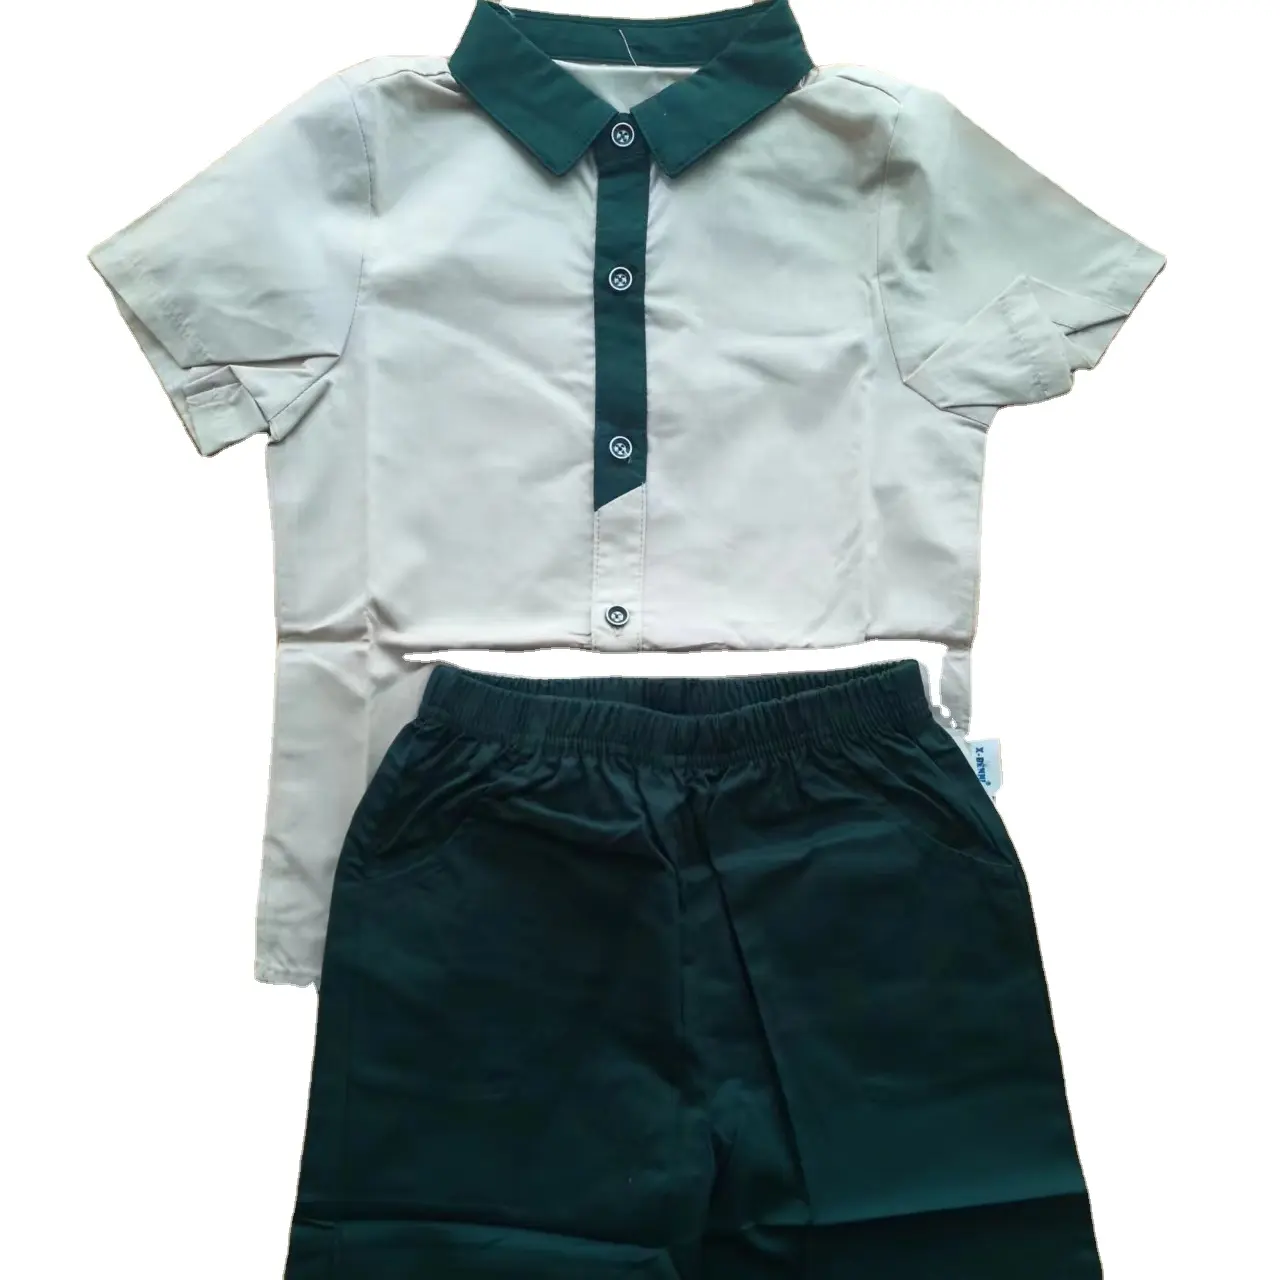 Summer baby cute cartoon bear clothing sets baby Short Sleeve T-Shirt Top + shorts 2-piece set for boys and girls P6005